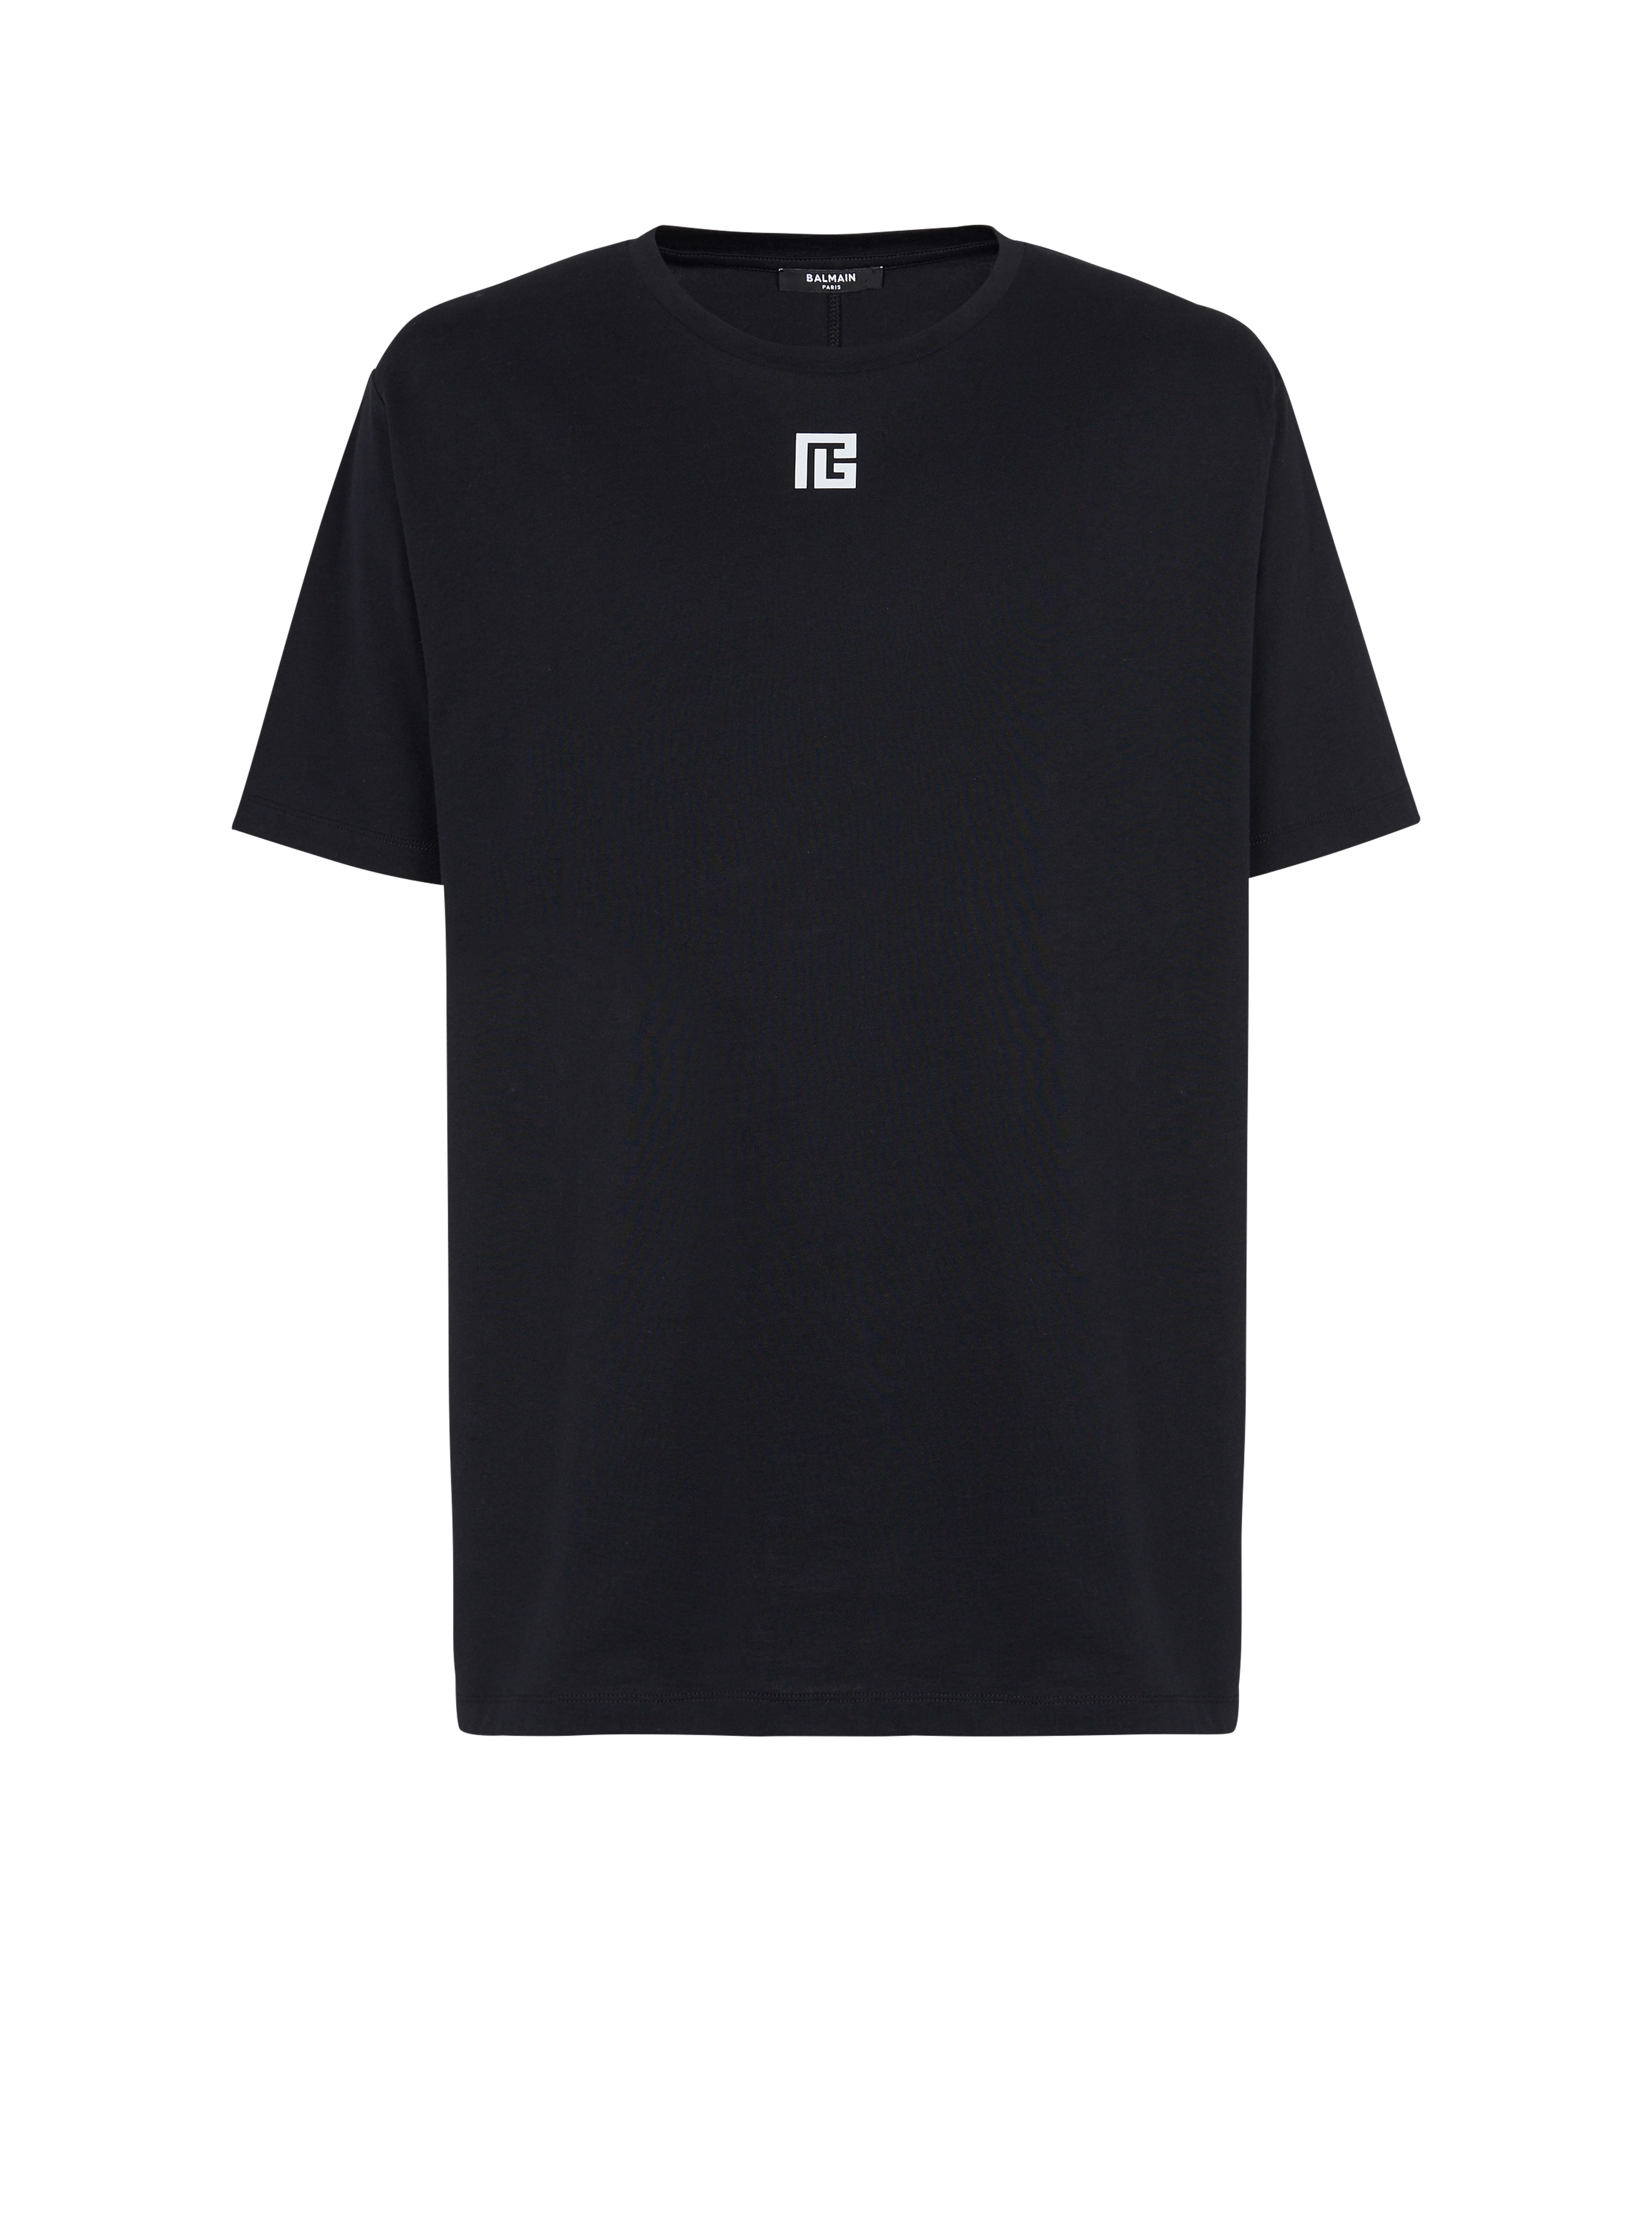 T-shirt in eco-responsible cotton with reflective Balmain maxi logo print, black